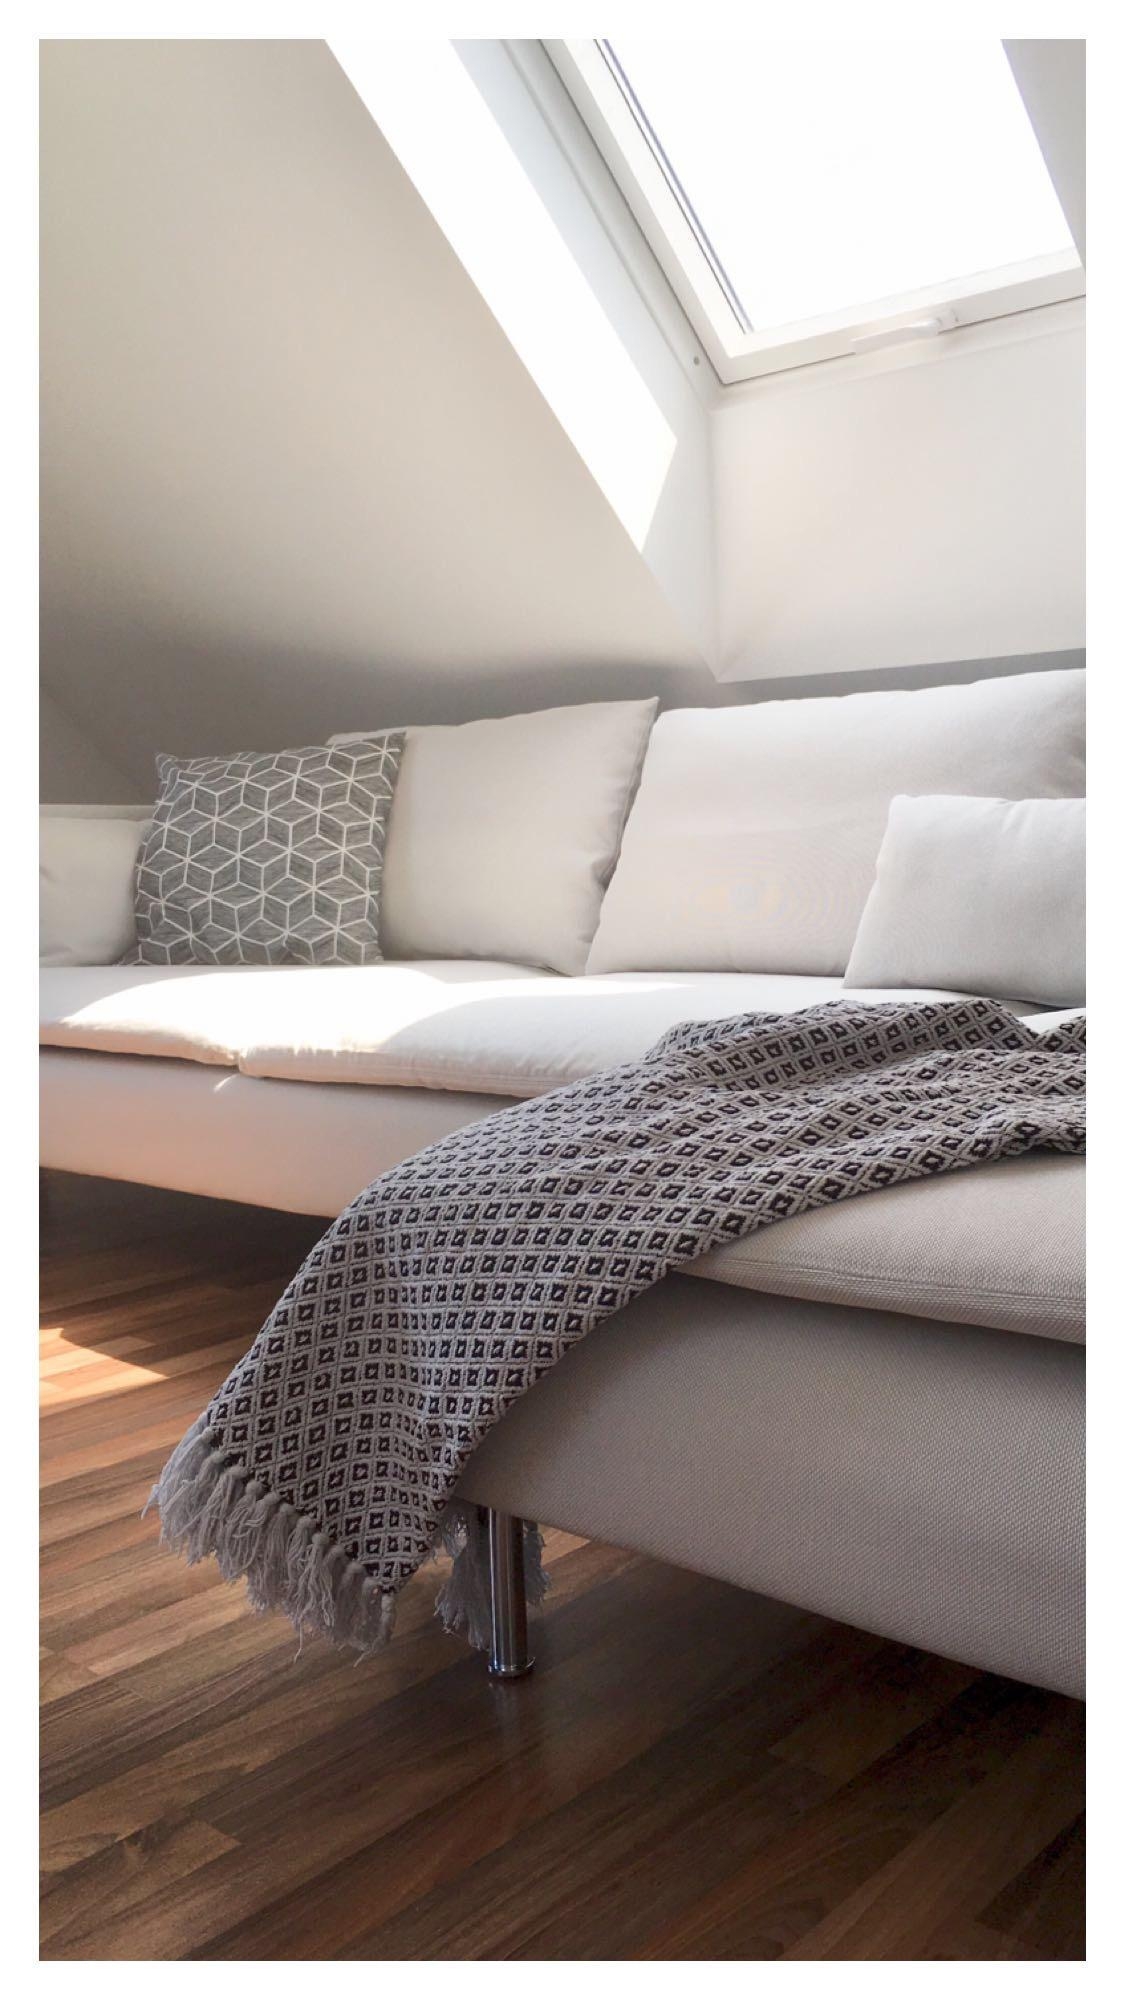 TopFLOOR

#dachgeschoss #white #living #topfloor #couch #couchstyle #greycrownhome